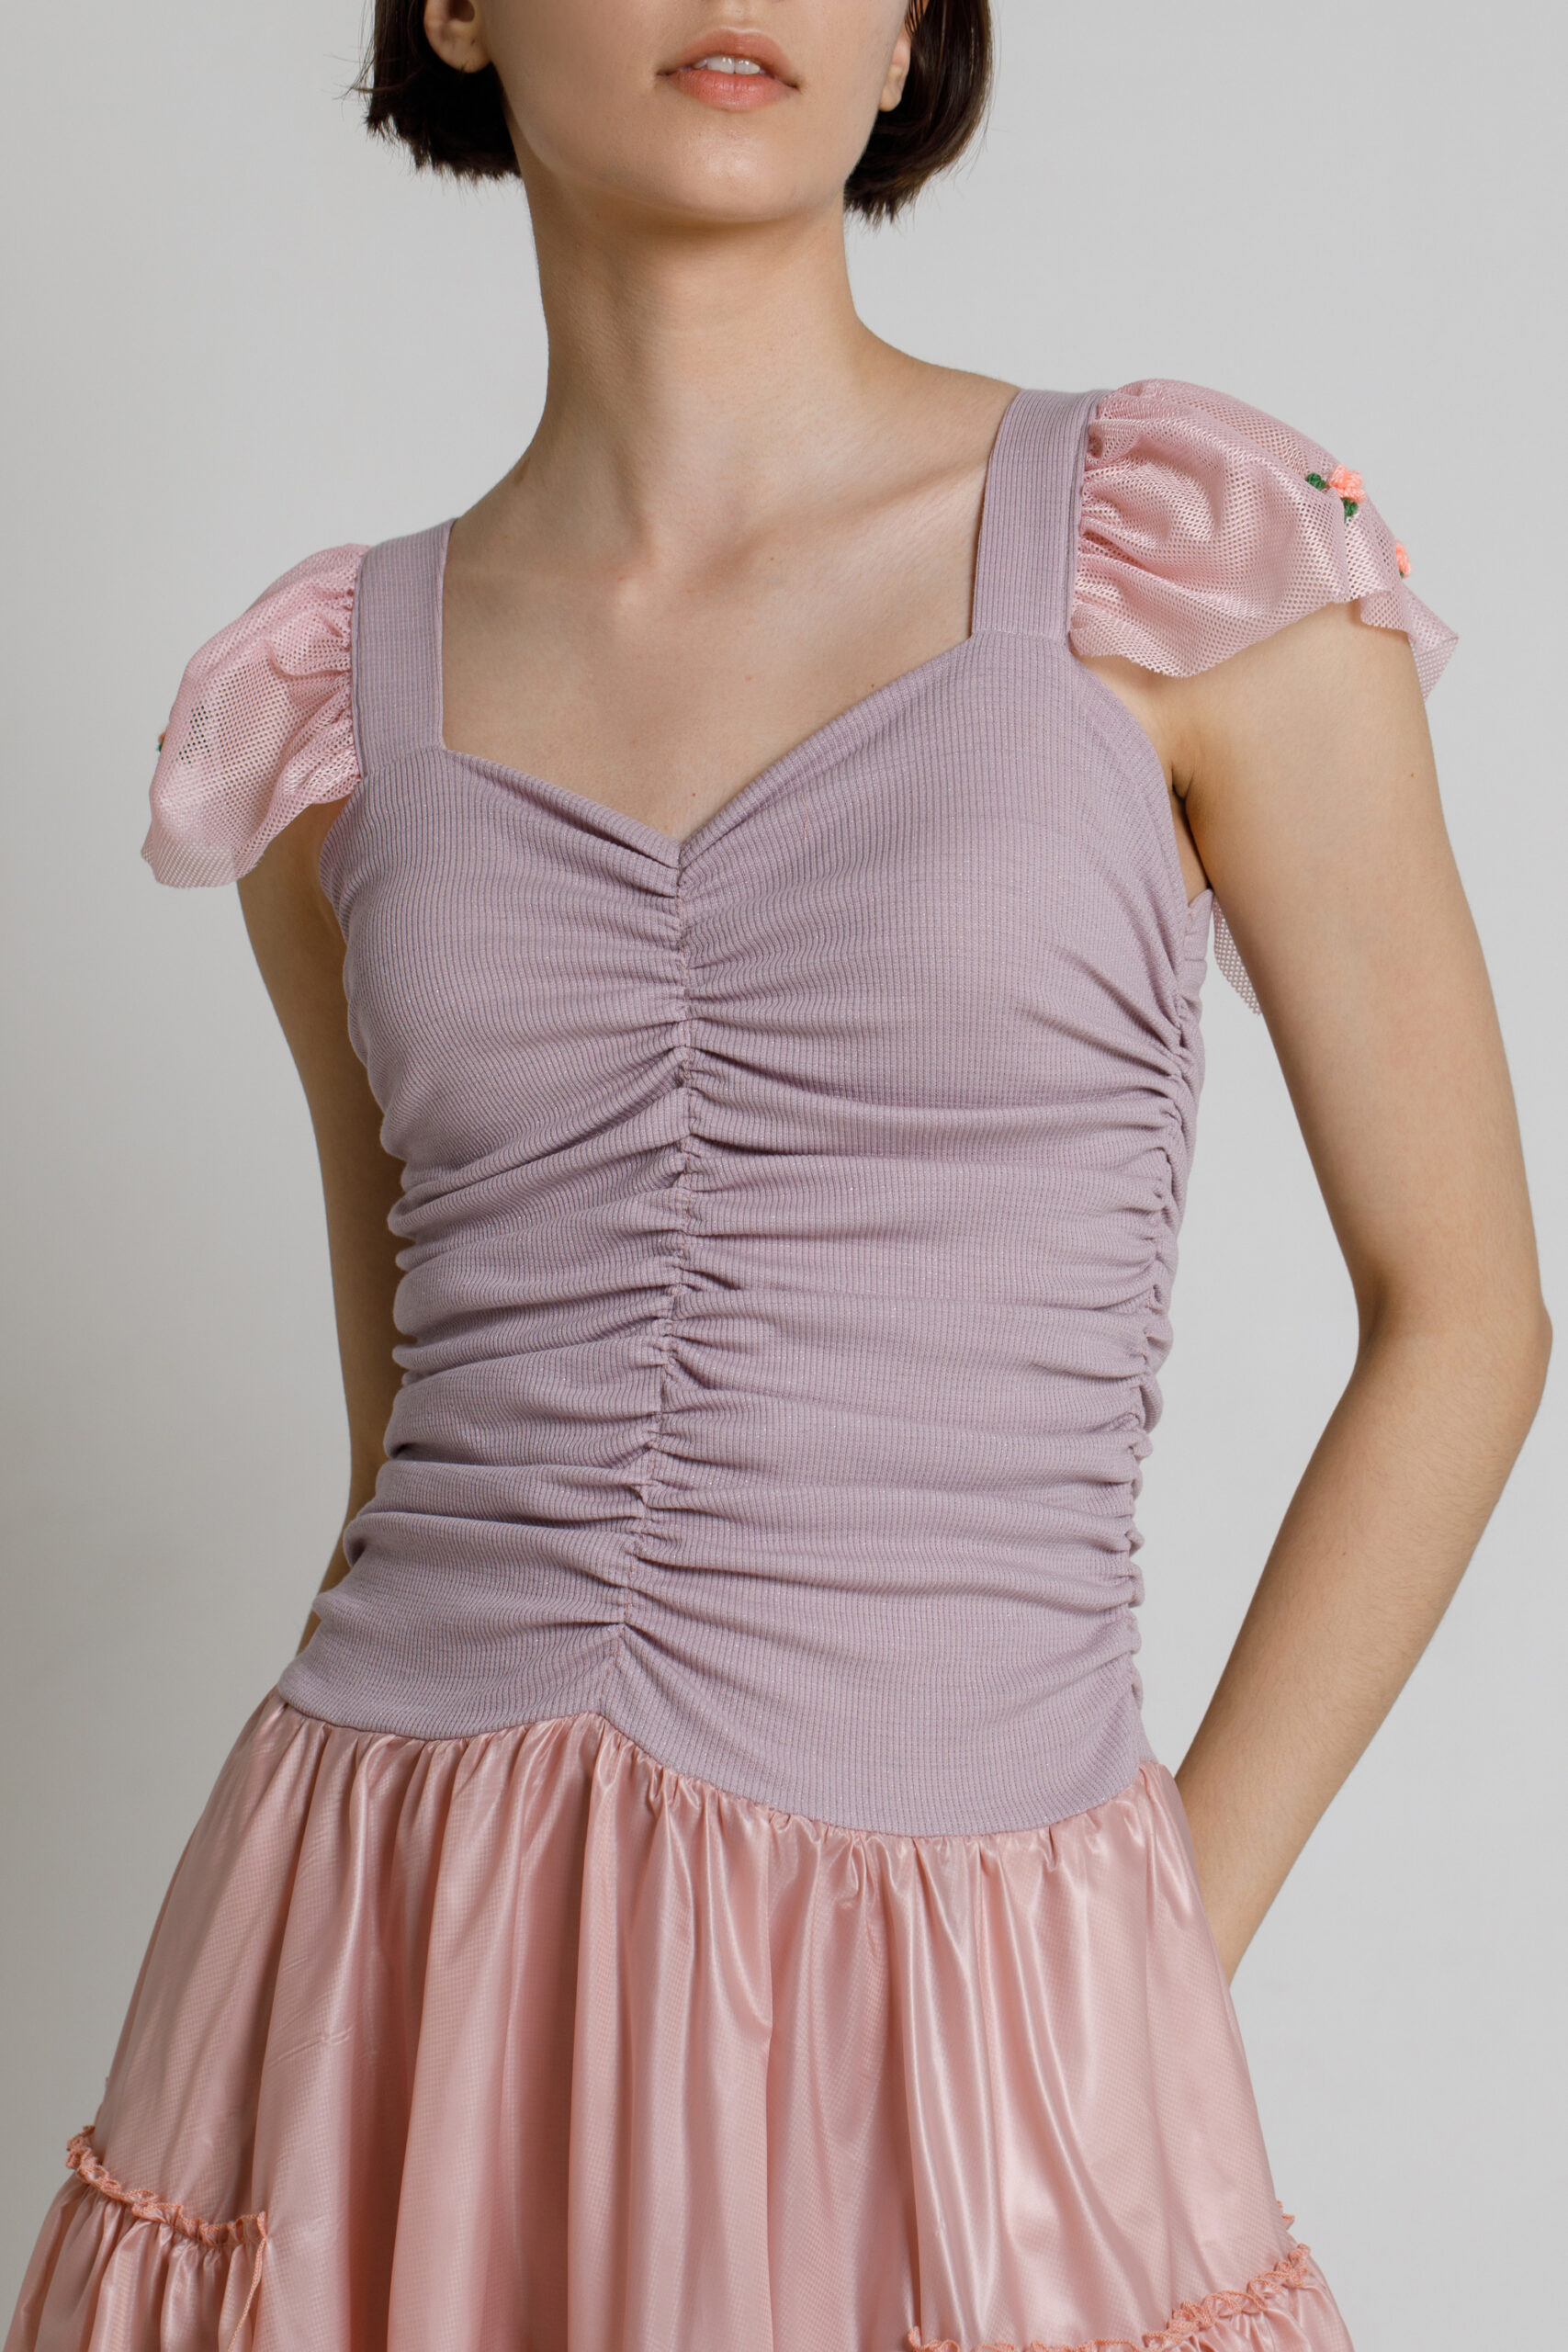 VALY pink asymmetric casual dress with ruffles. Natural fabrics, original design, handmade embroidery